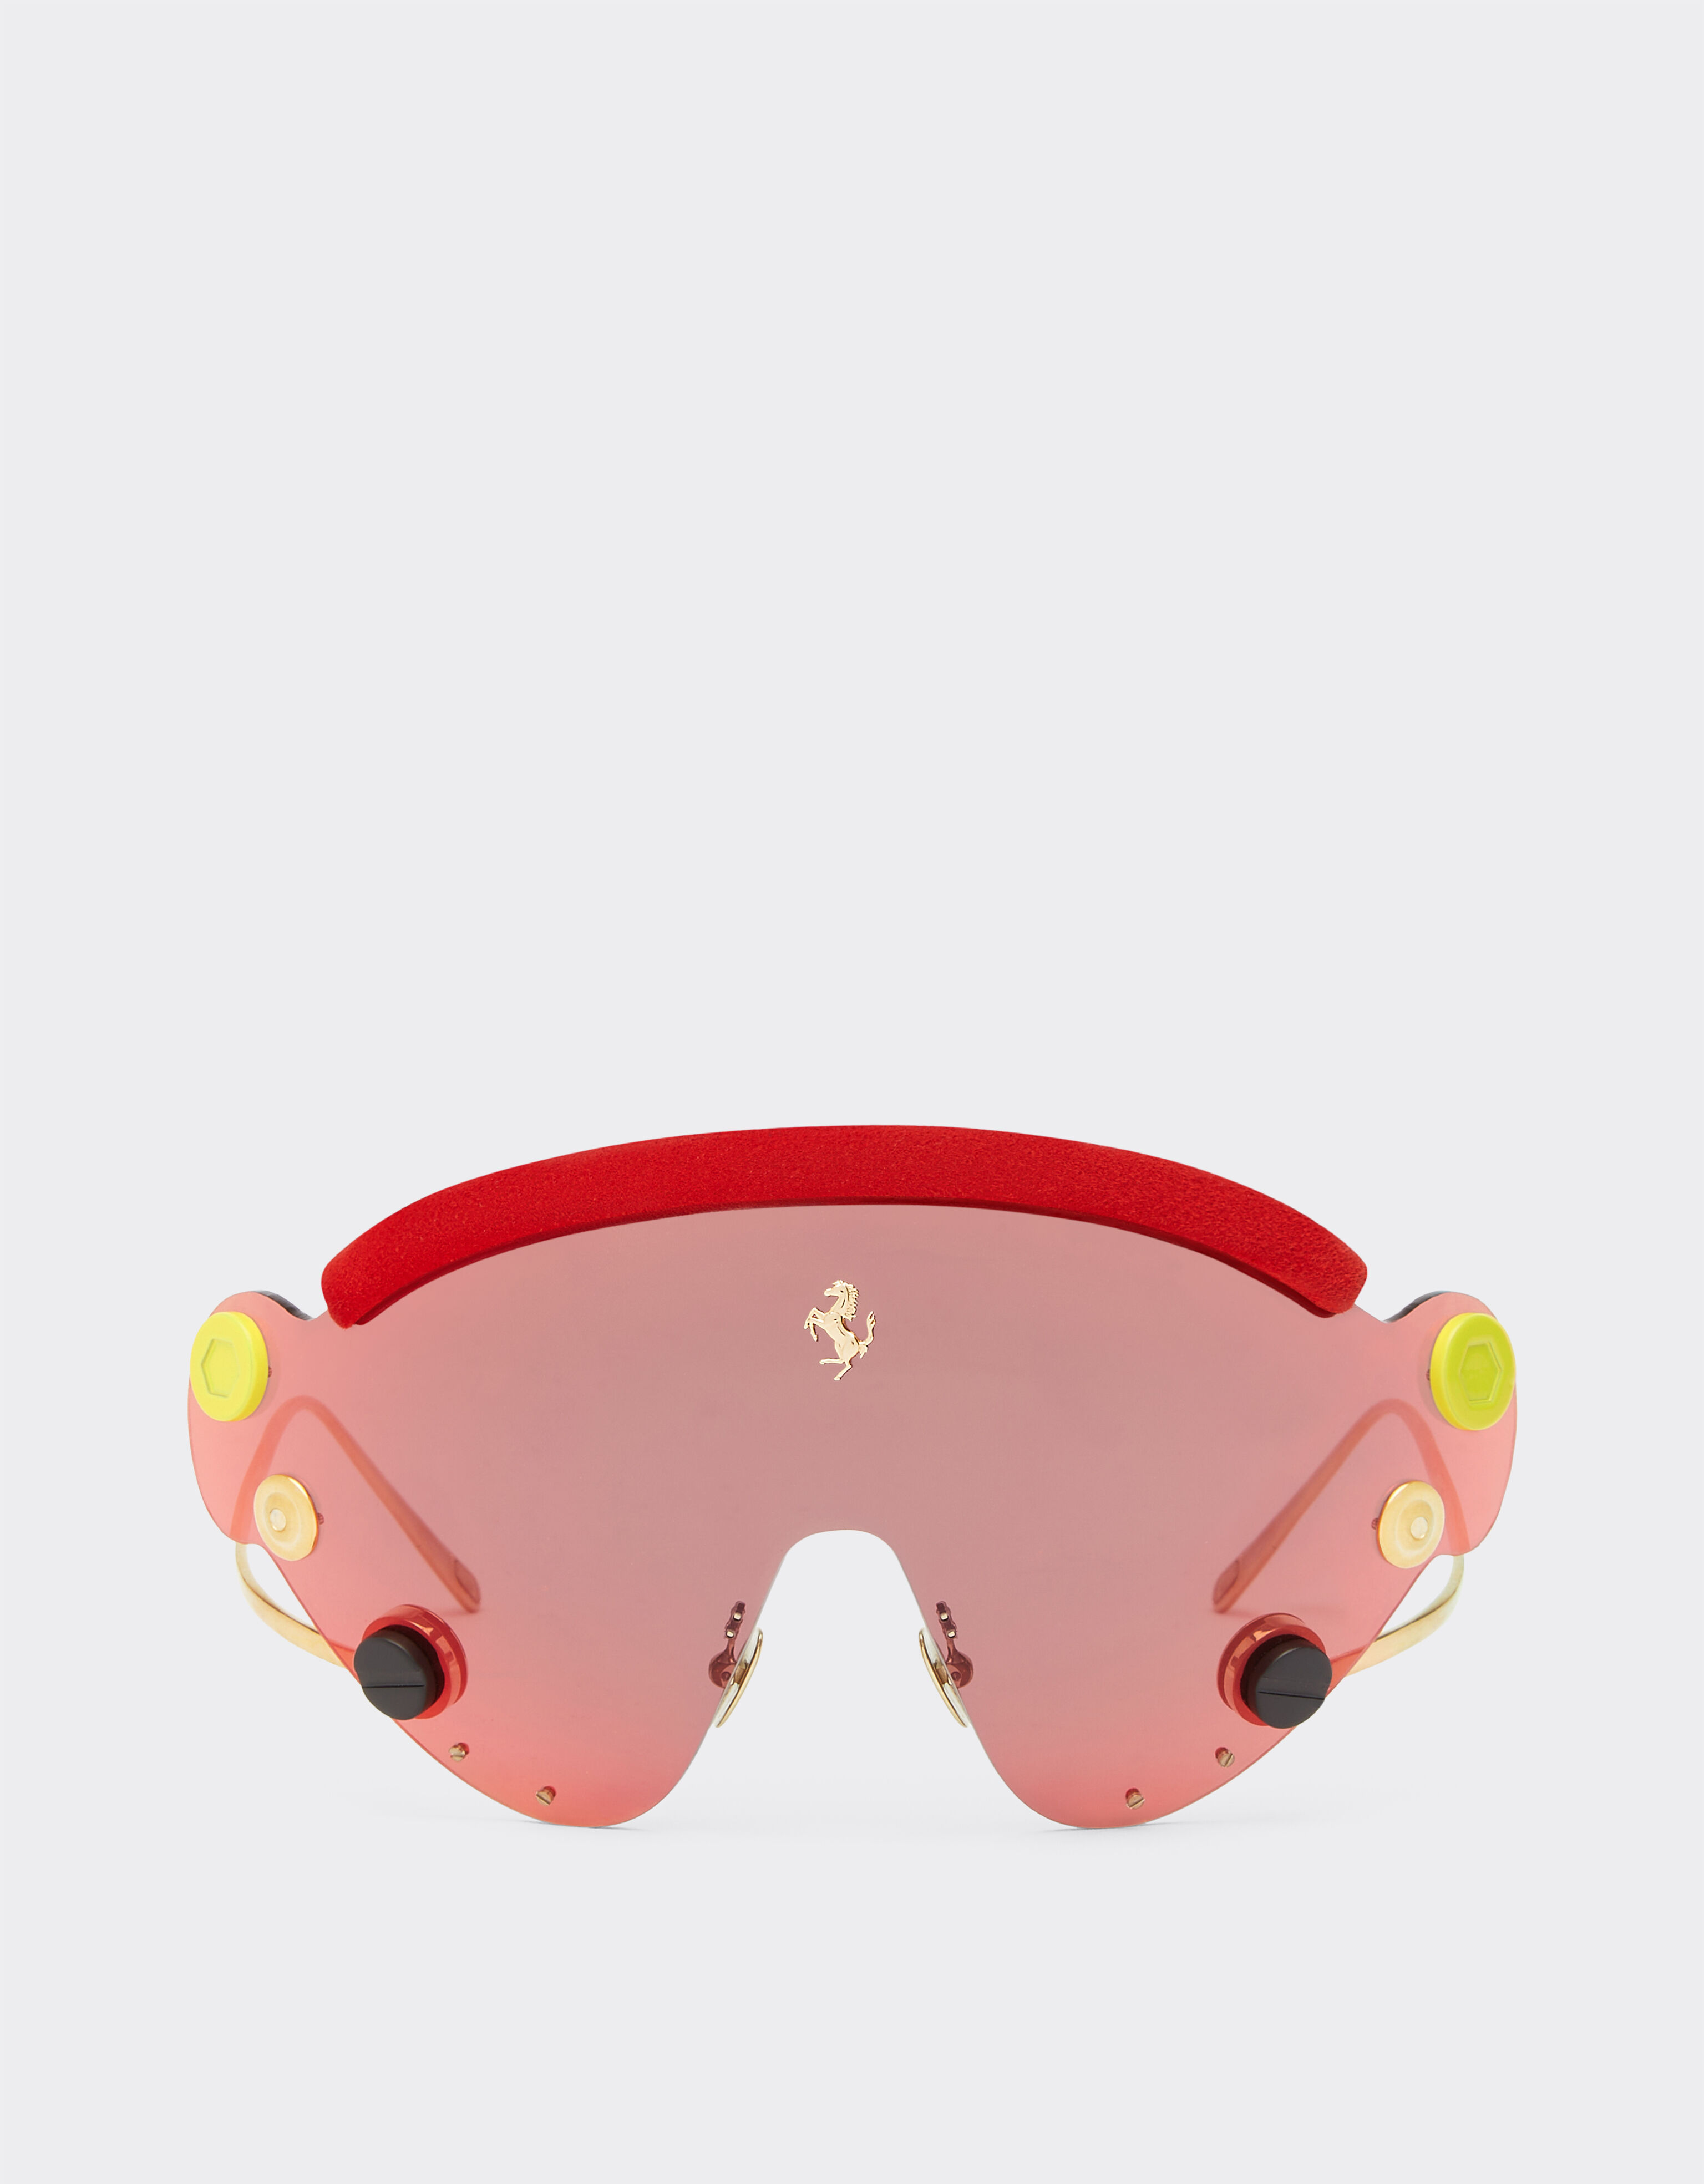 Ferrari Limited Edition Ferrari sunglasses in red and gold-tone metal with red mirror shield Silver F1247f